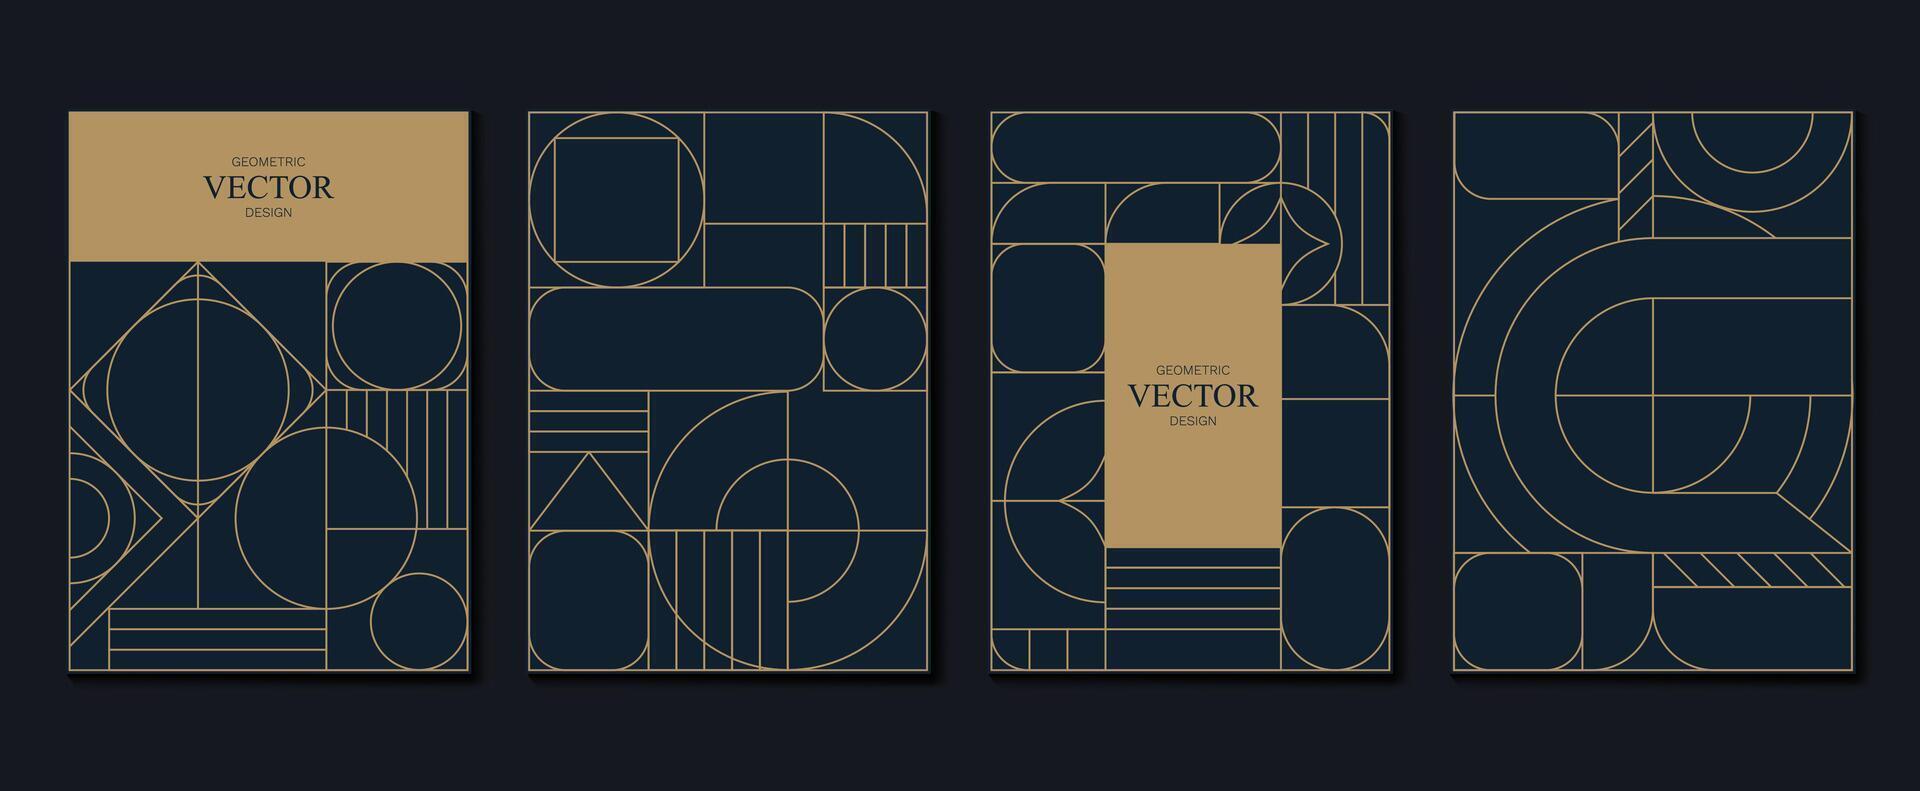 Geometric line pattern poster design . Set invitation card of abstract art decor design on dark blue background. Use for wedding invitation, cover, VIP card, print, gala, wallpaper. vector